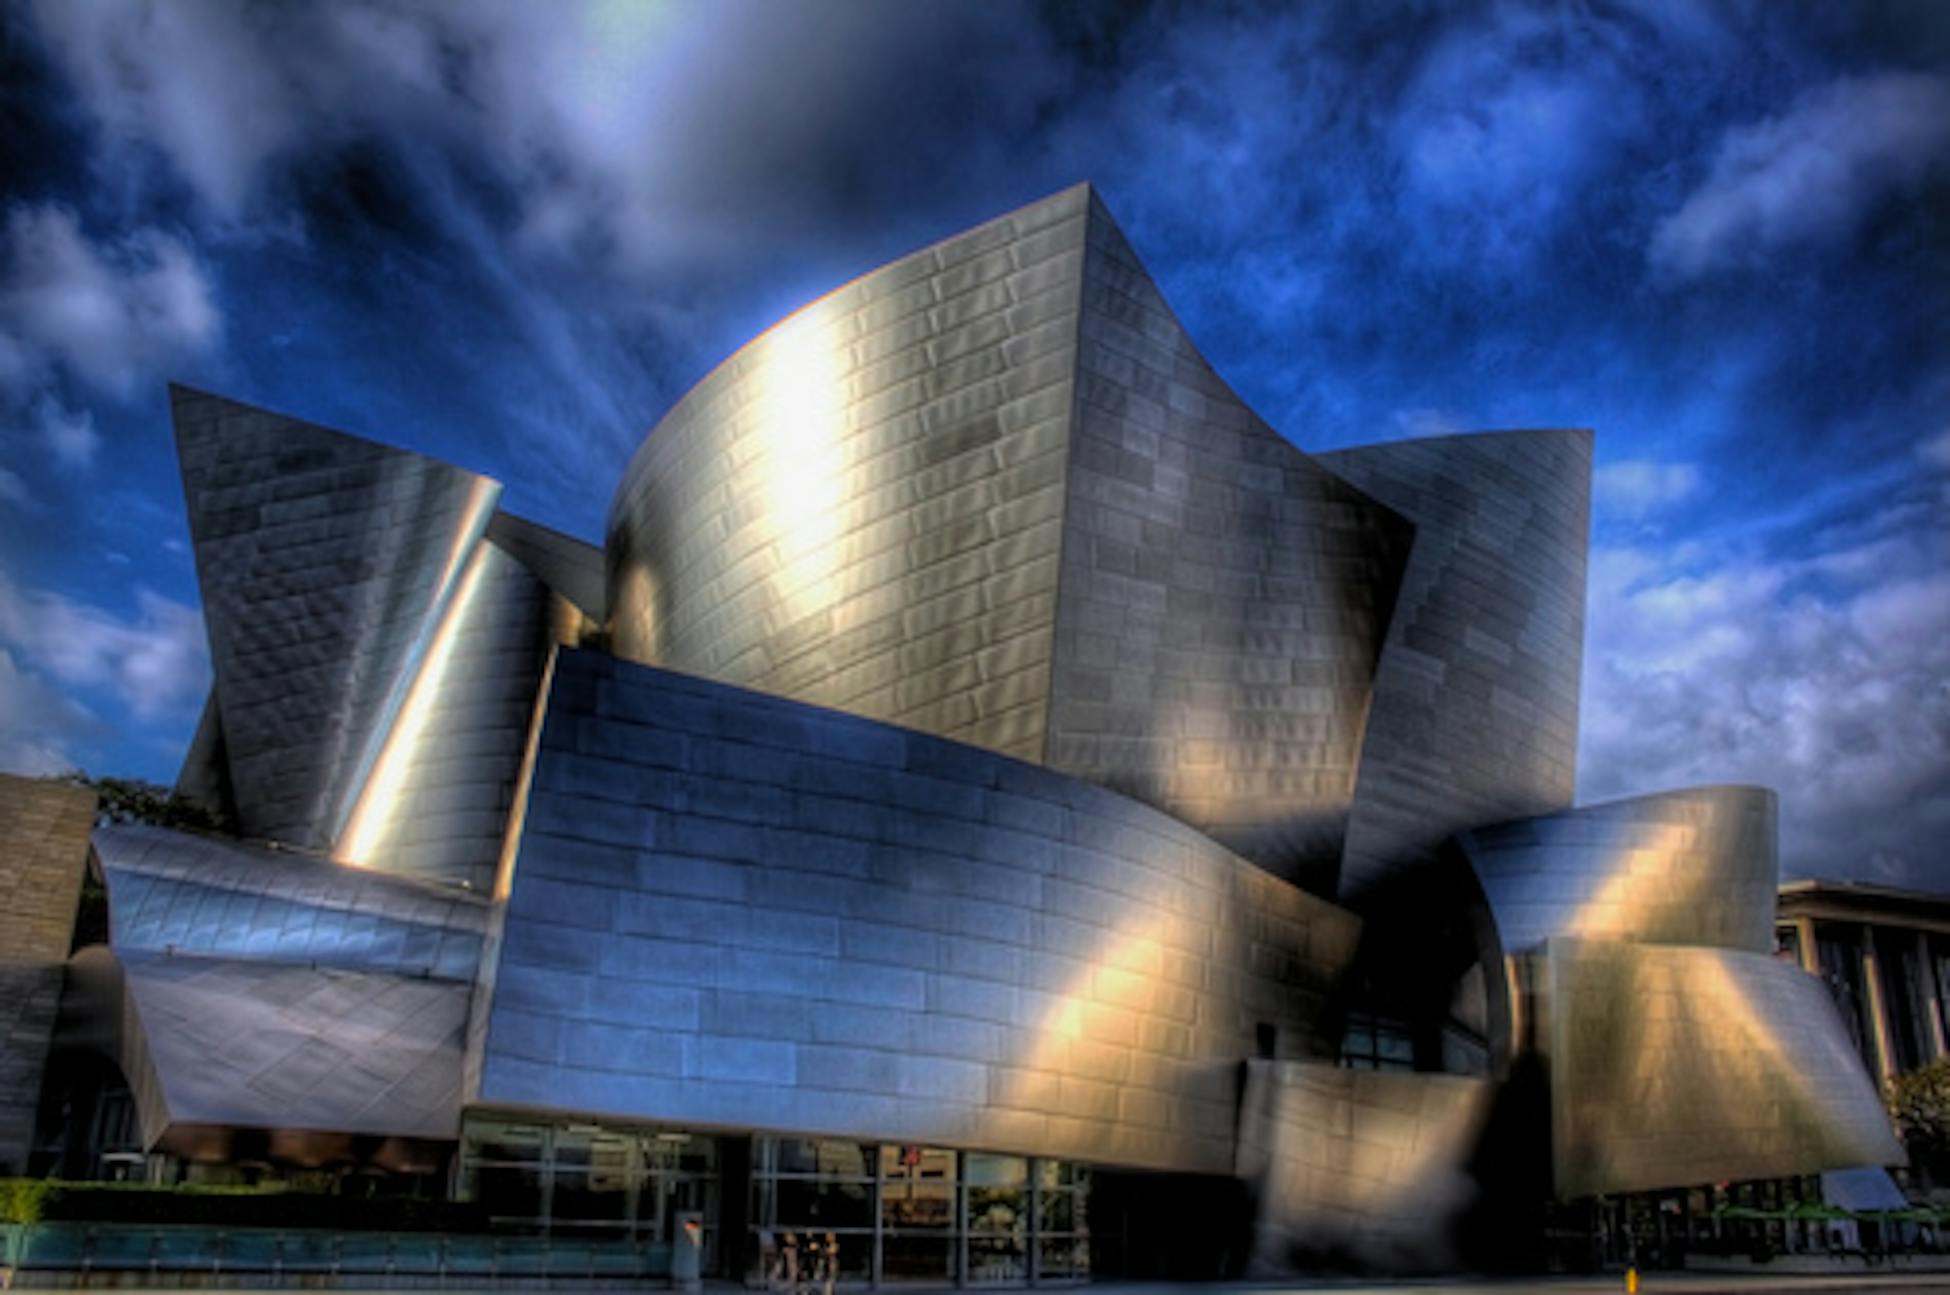 Architecture ru. Фрэнк Гери концертный зал Уолта Диснея. Лос Анджелес концертный зал Уолта Диснея. Концертный зал имени Уолта Диснея (Лос-Анджелес, США). Концертный зал Уолта Диснея в Лос-Анджелесе Фрэнк Гери.